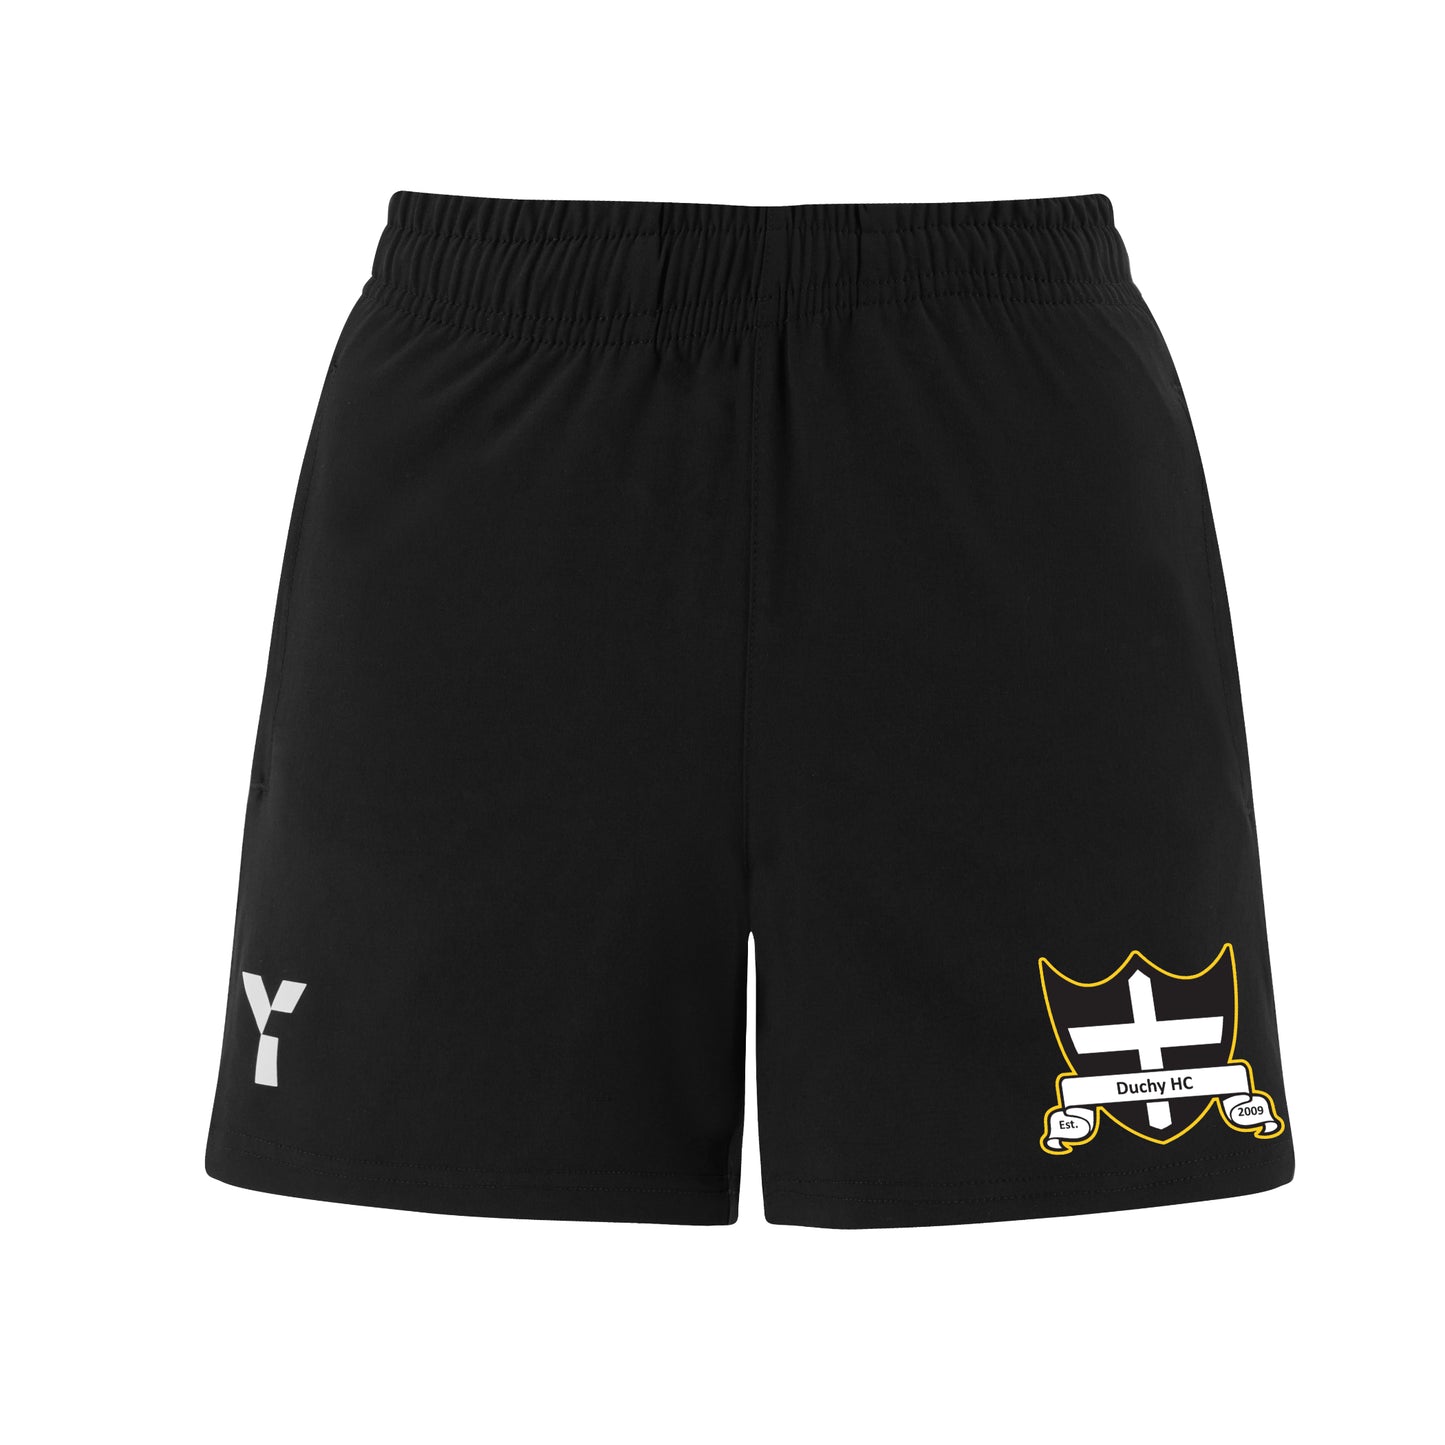 Duchy HC - Shorts Men's Black